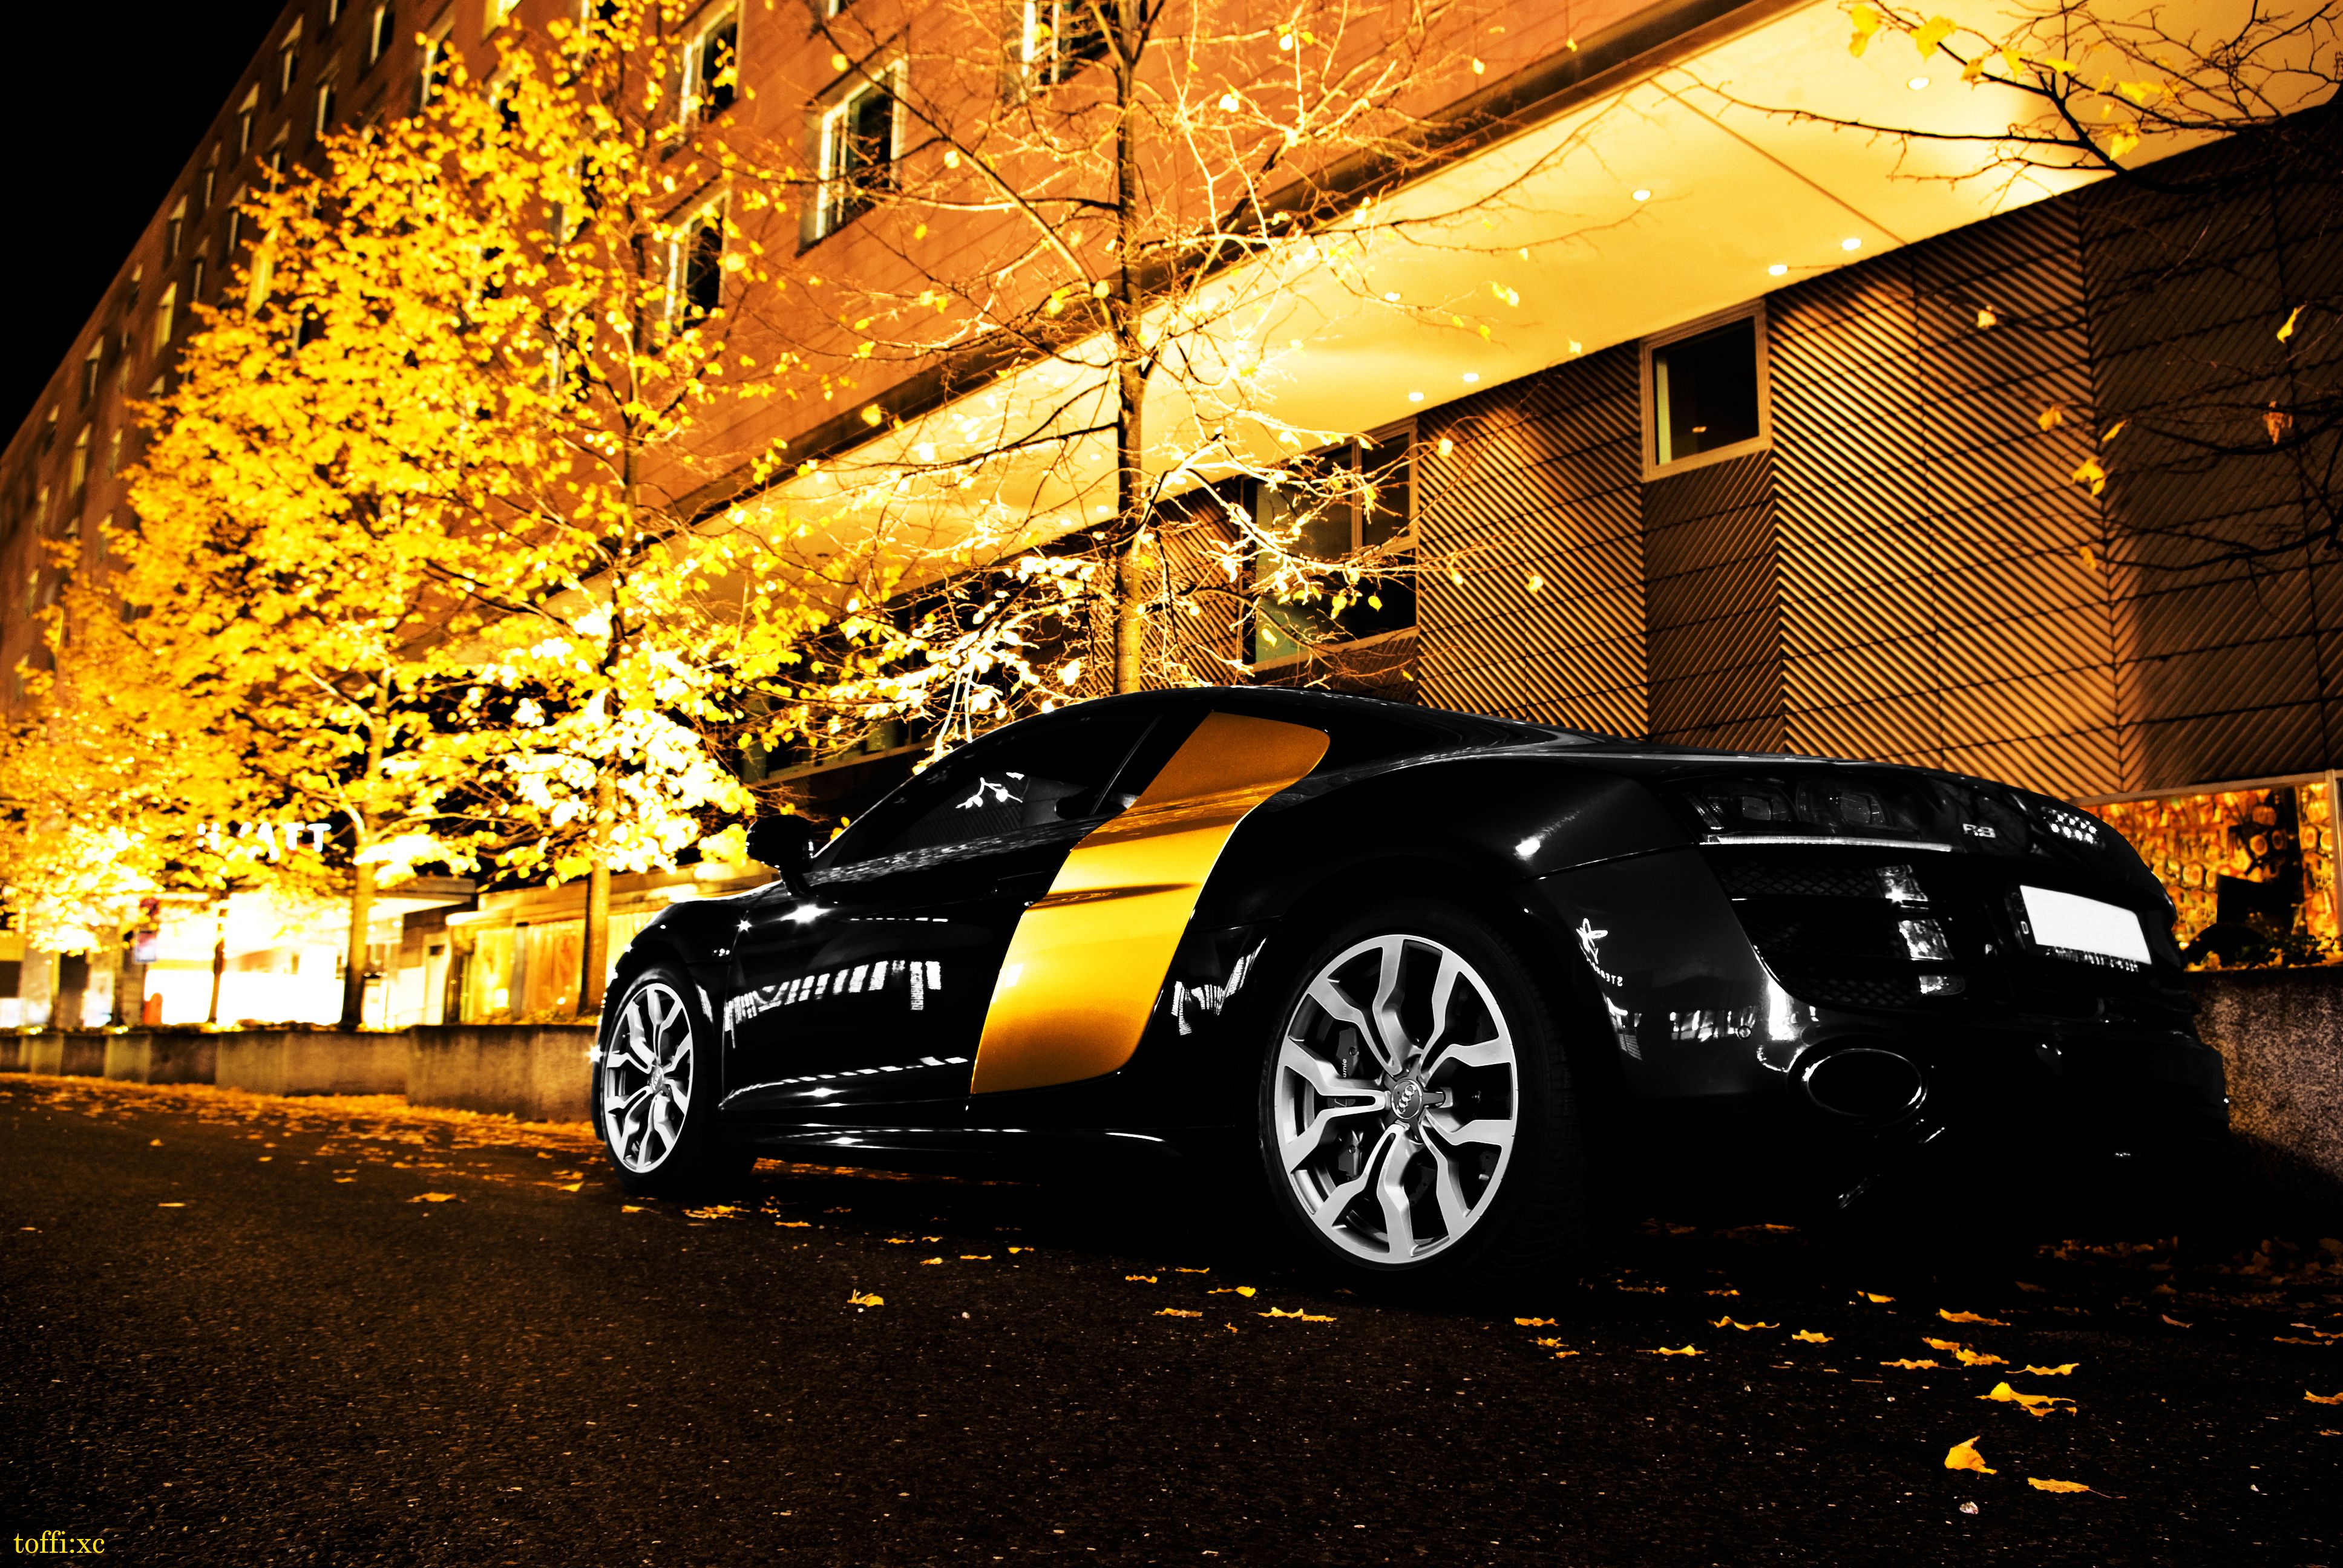 black and gold. Car wallpaper, HD wallpaper of cars, Cool car wallpaper hd